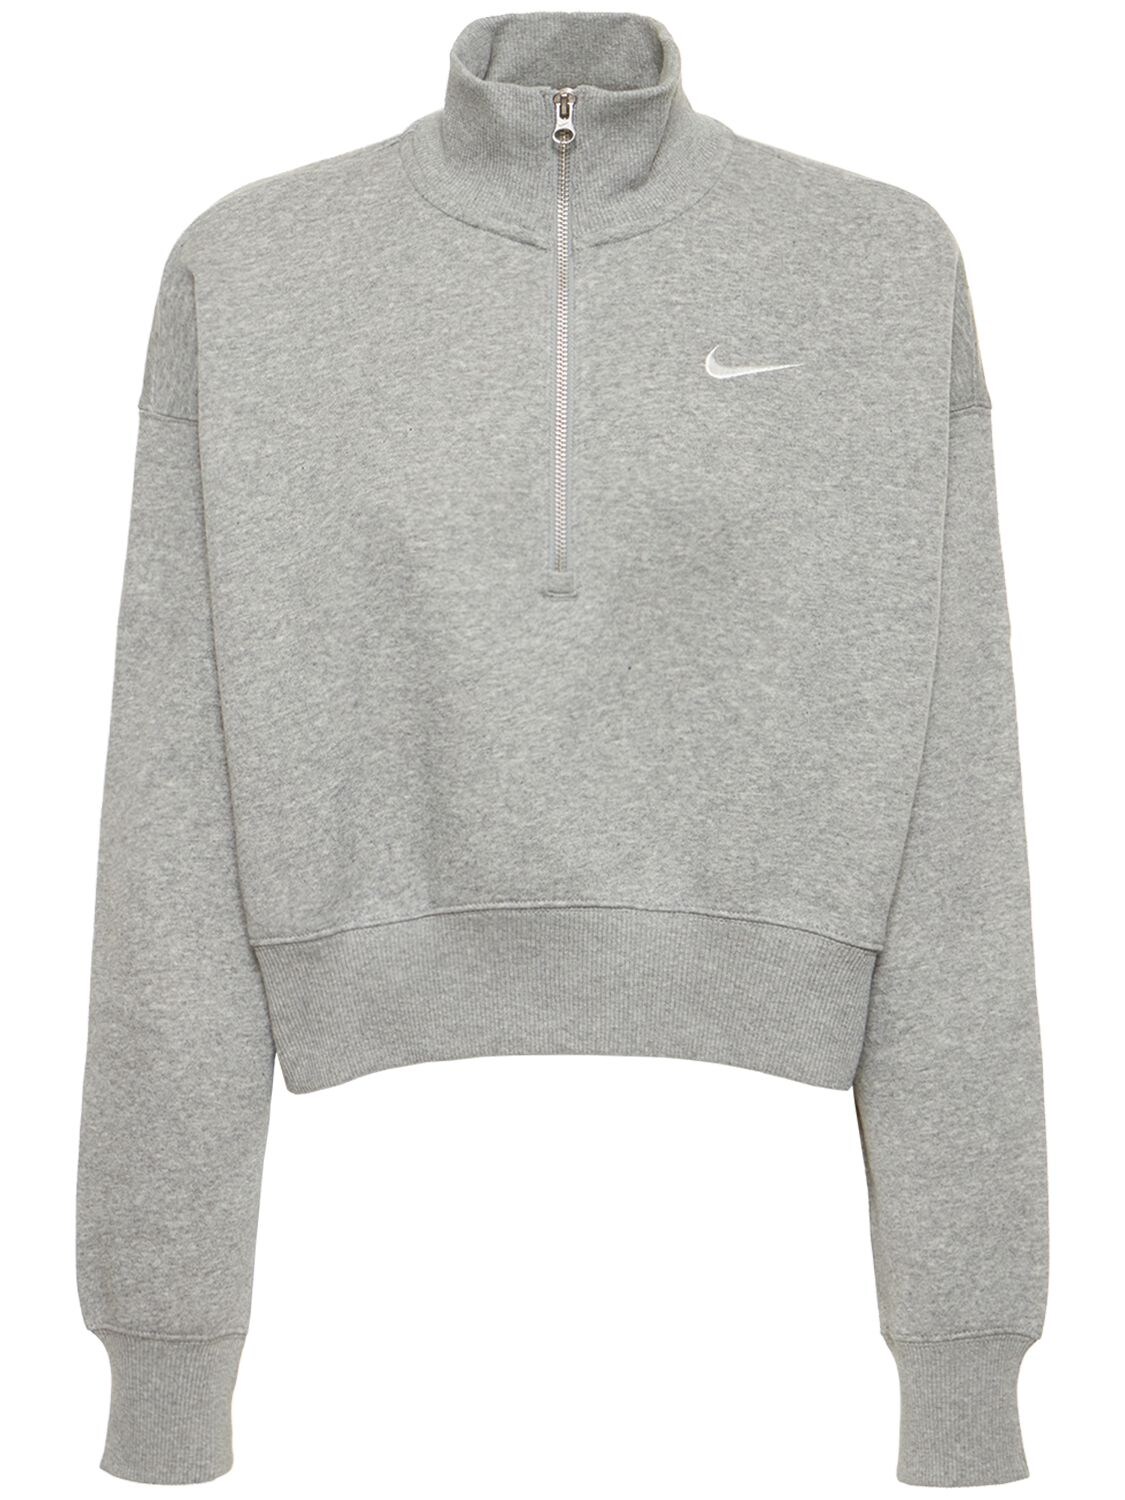 Nike Cropped Cotton Blend 1/2 Zip Sweatshirt